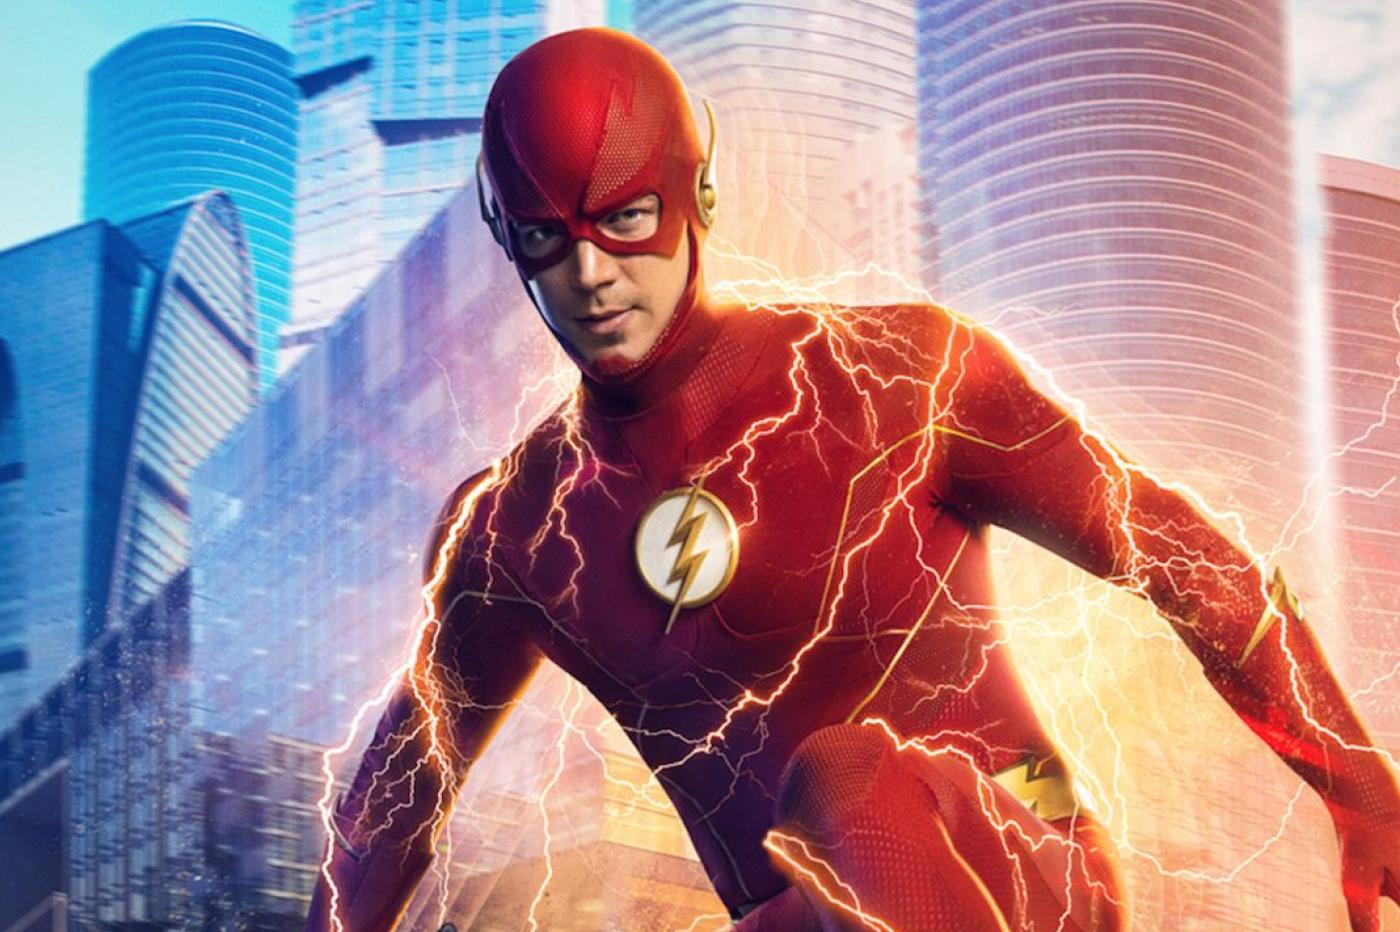 The Flash Barry Allen